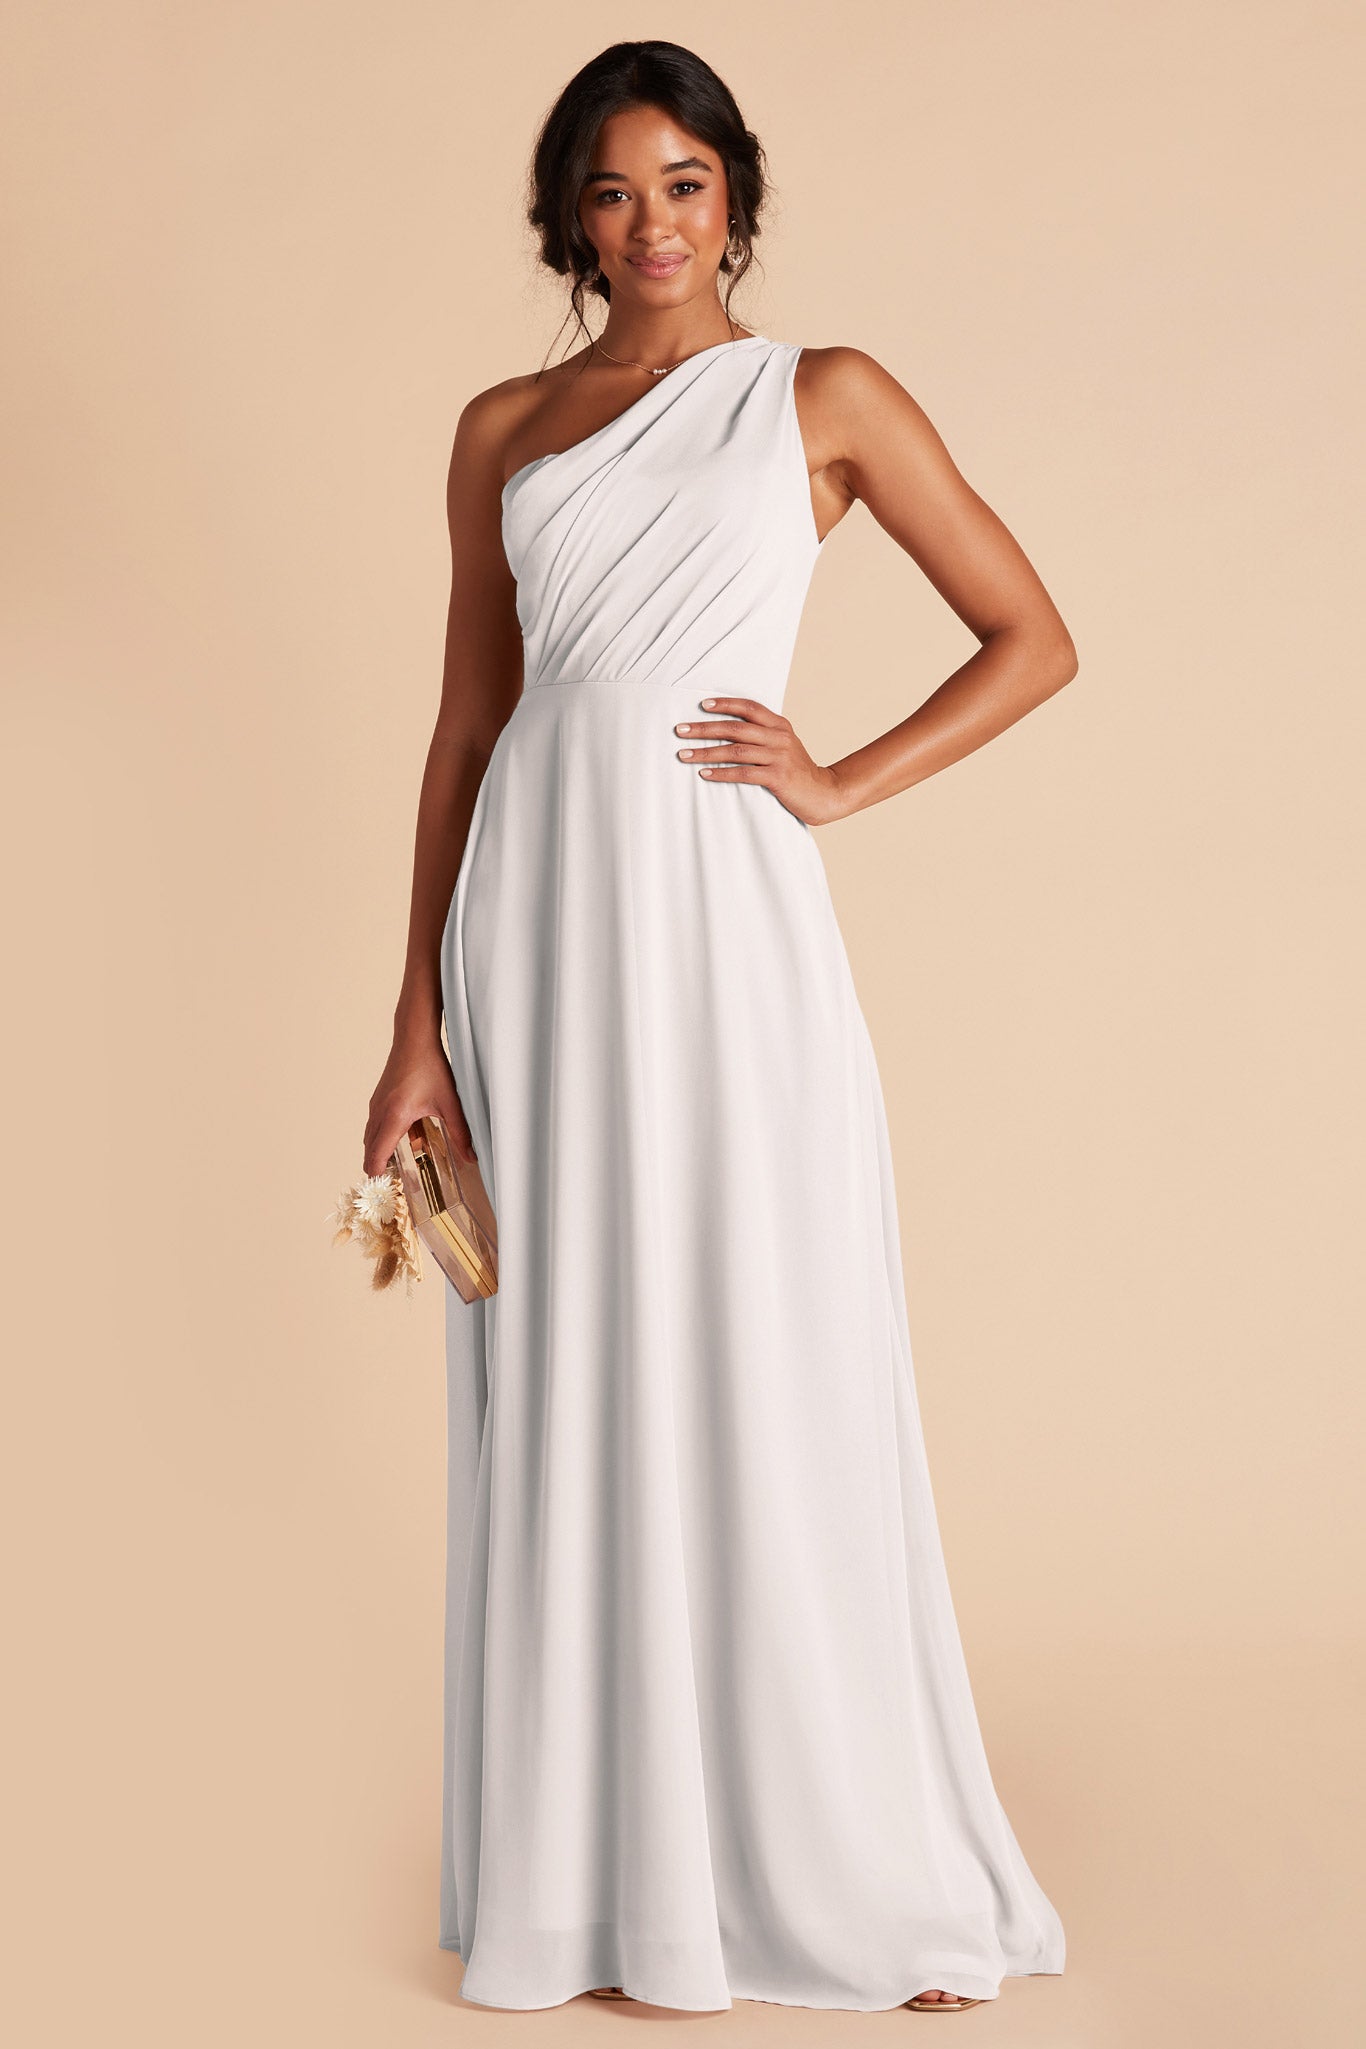 White Chiffon Dress by Birdy Grey